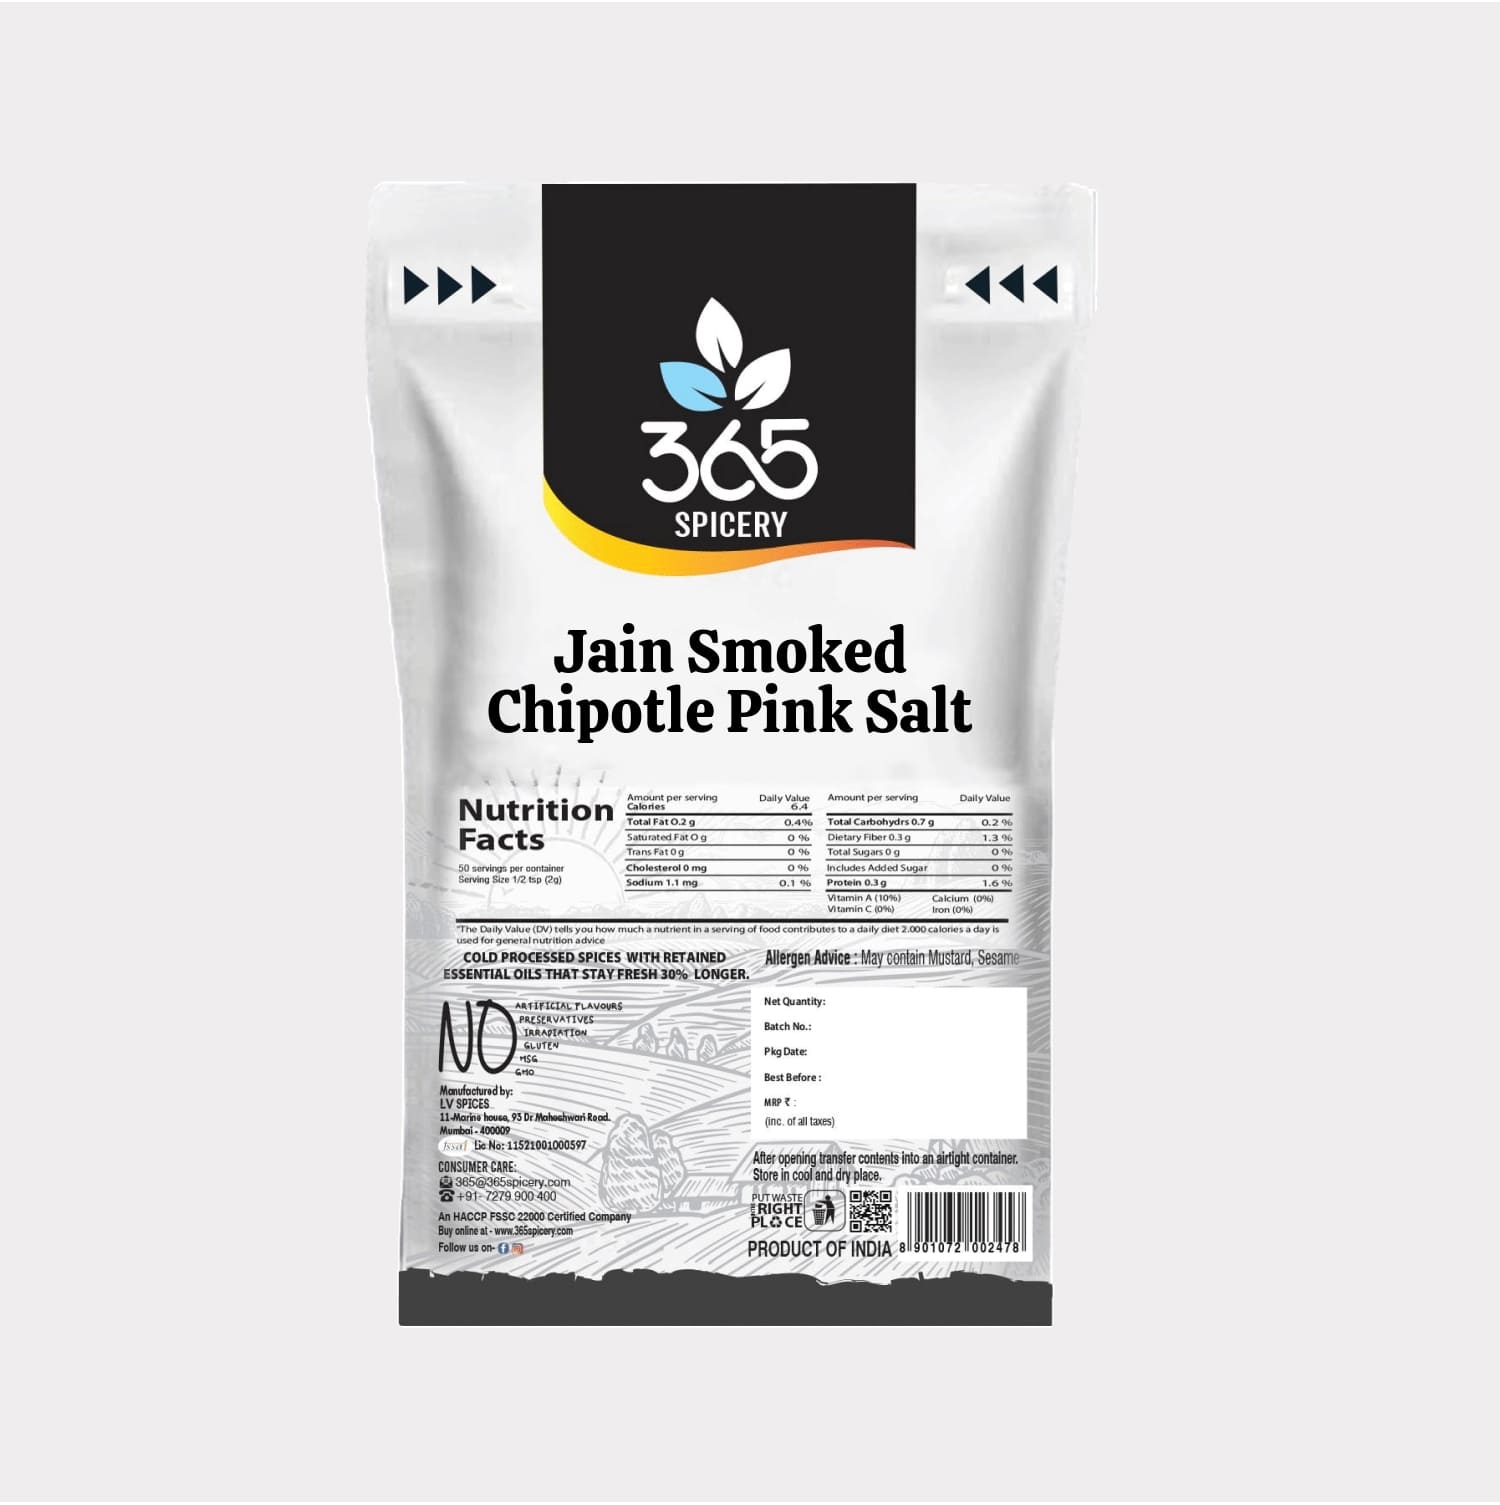 Jain Smoked Chipotle Pink Salt